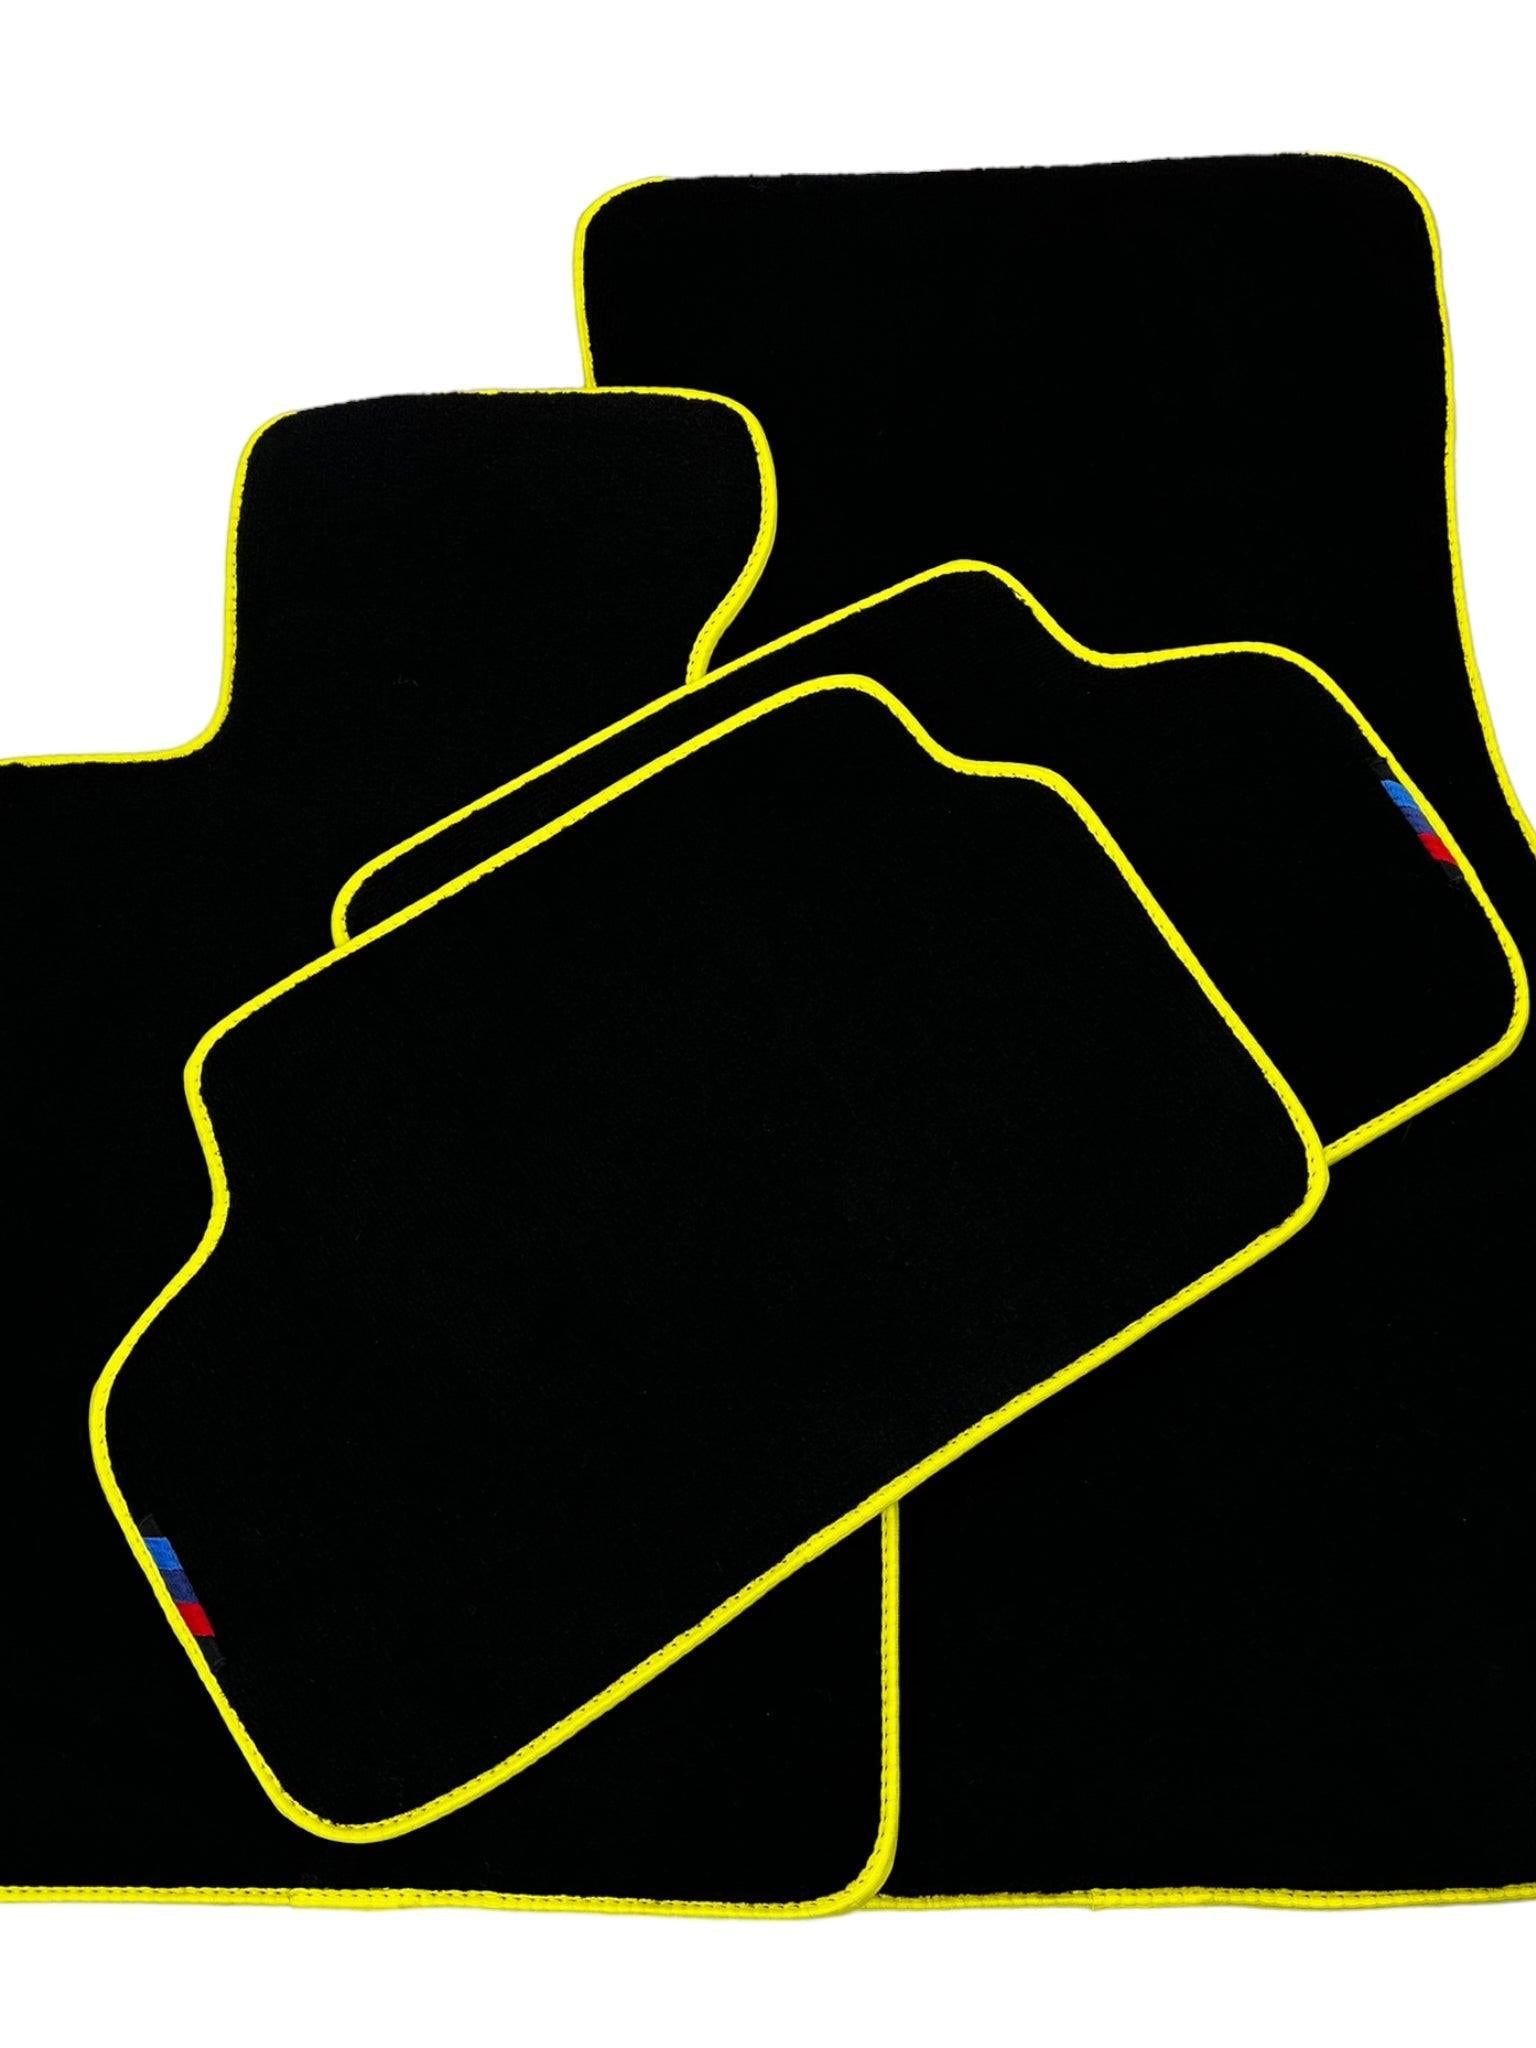 Black Floor Floor Mats For BMW 6 Series F12 | Fighter Jet Edition AutoWin Brand | Yellow Trim